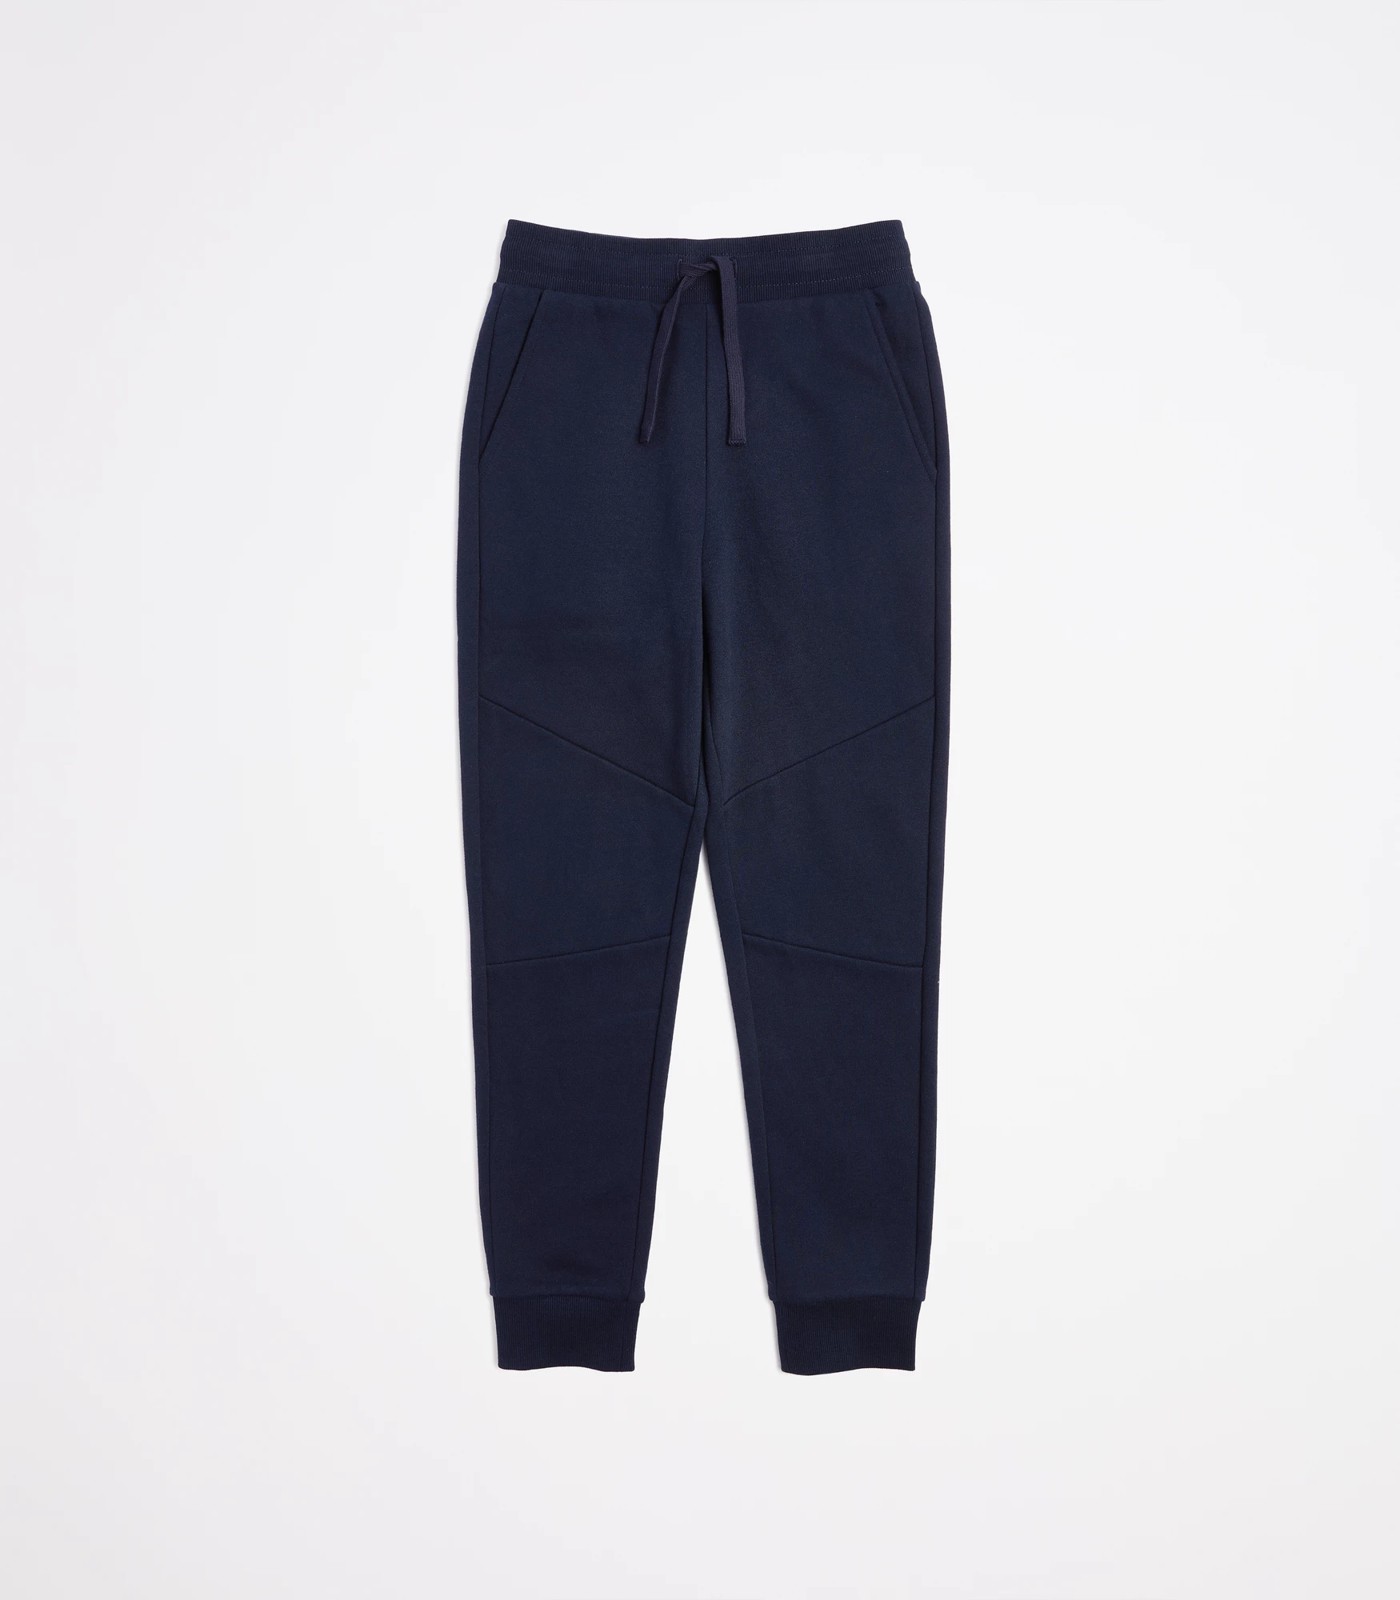 Premium Boys Sweatpants Jogger Pants – Slim Fit – Elastic Waistband & Cuff